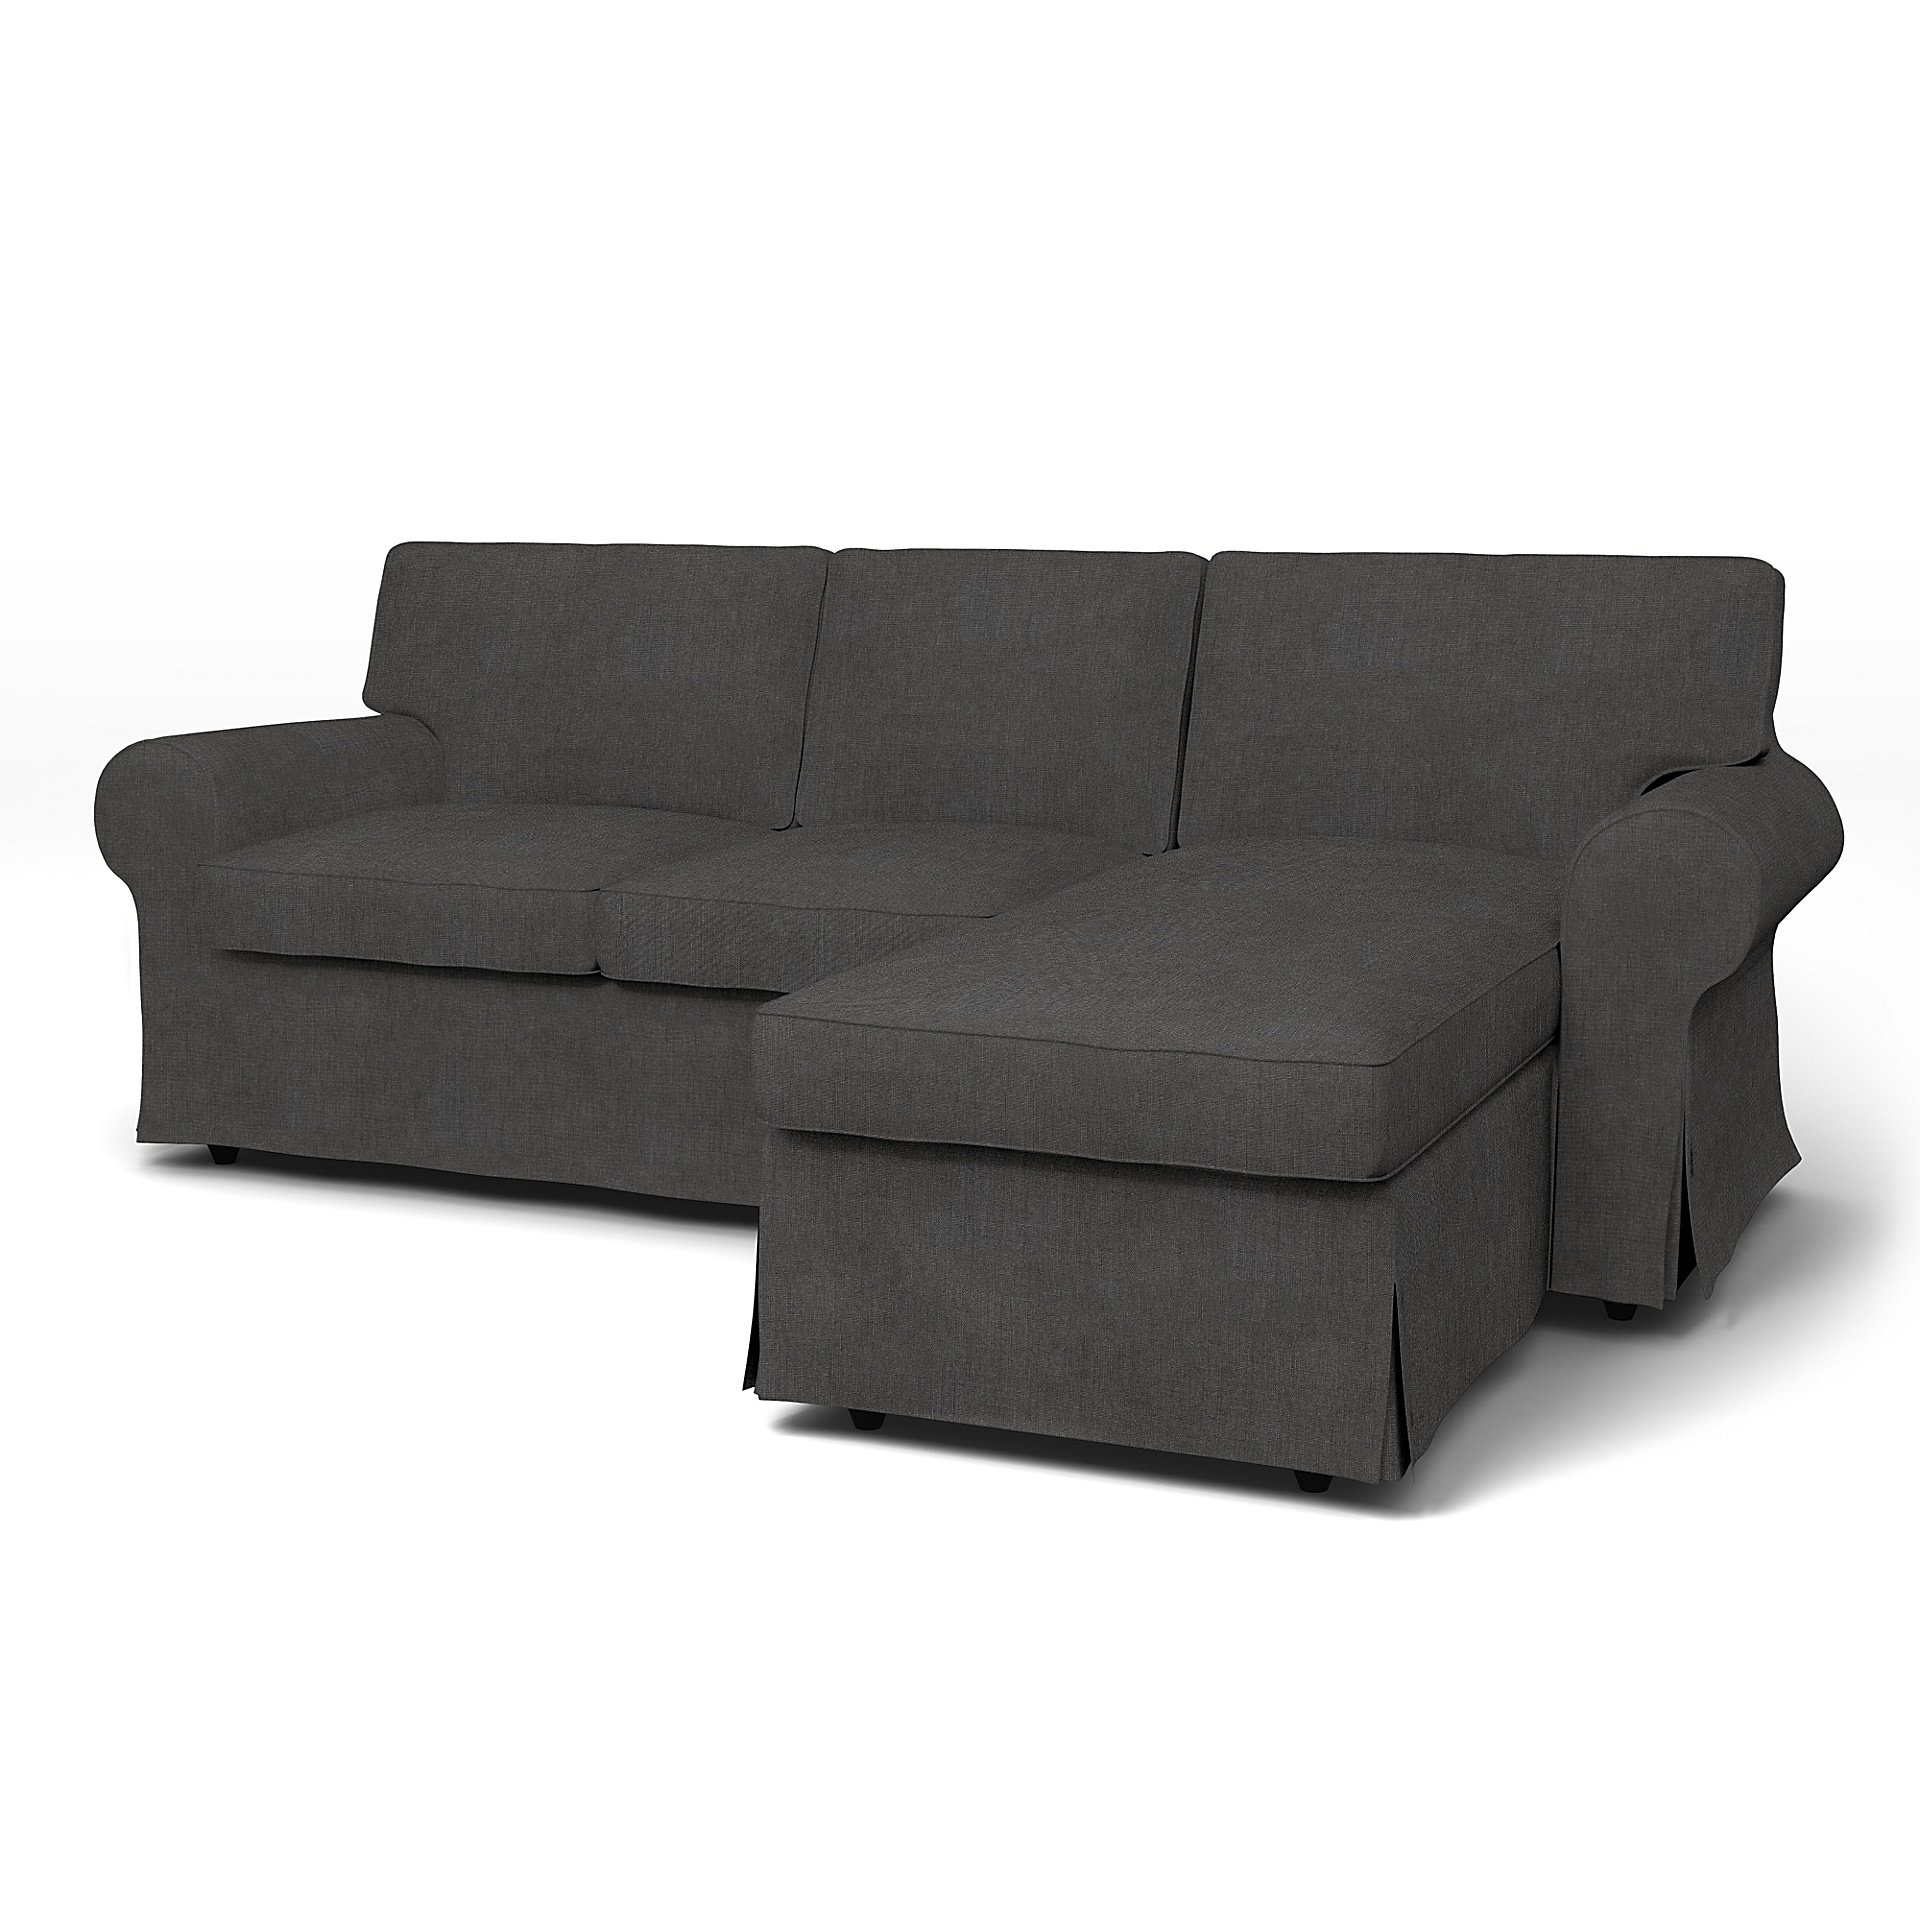 IKEA - Ektorp 3 Seater Sofa with Chaise Cover, Espresso, Linen - Bemz